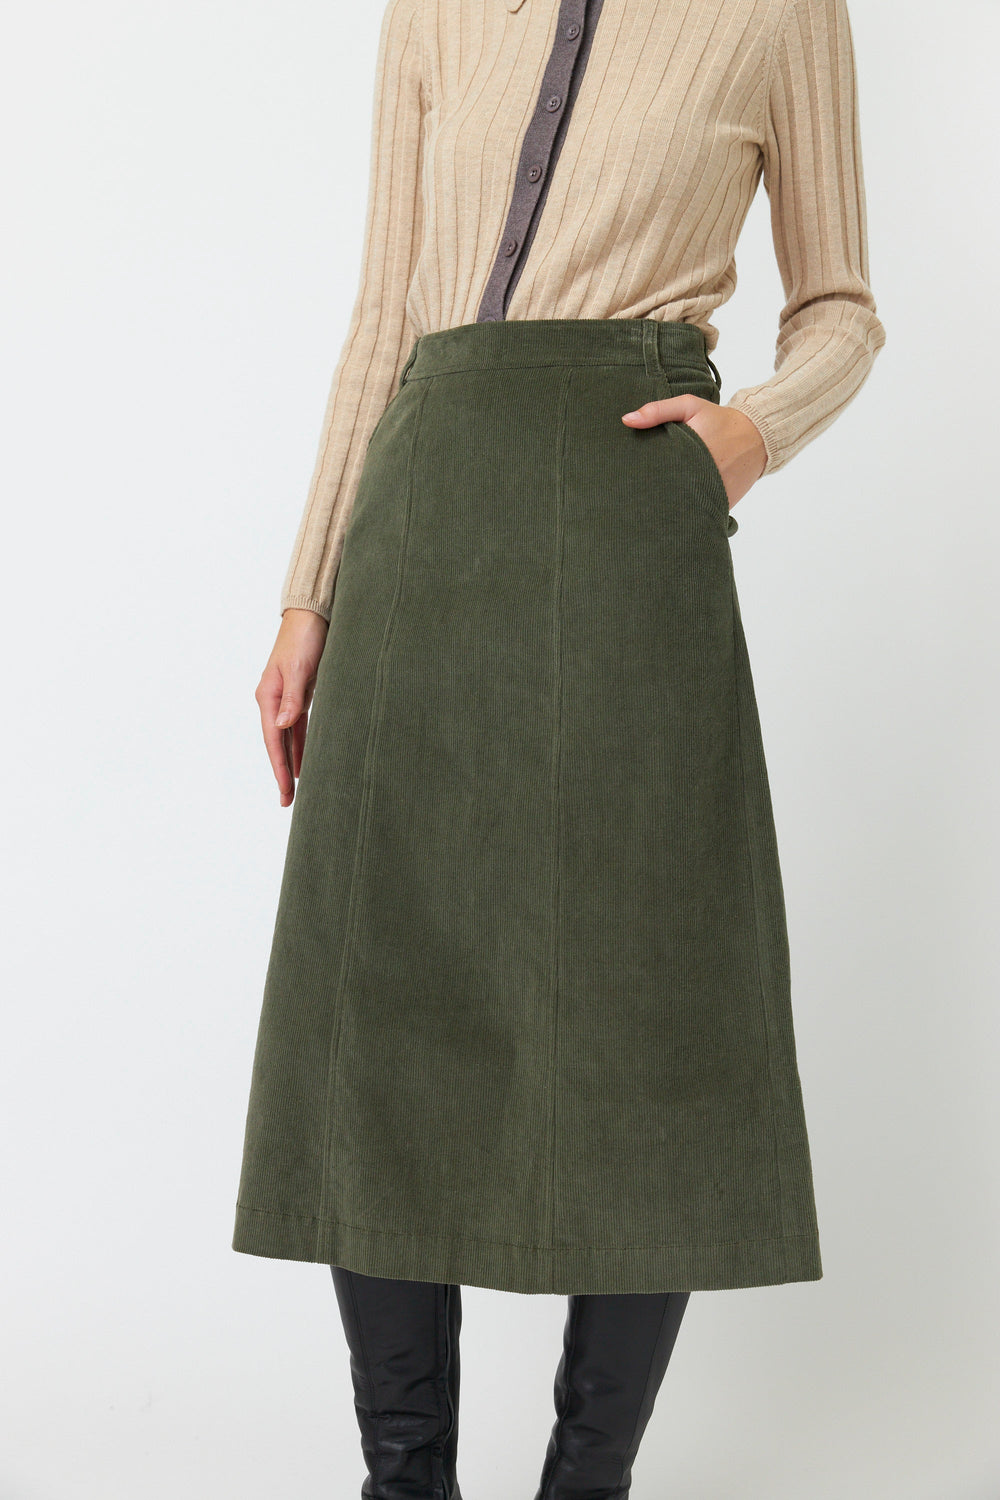 Cord skirt